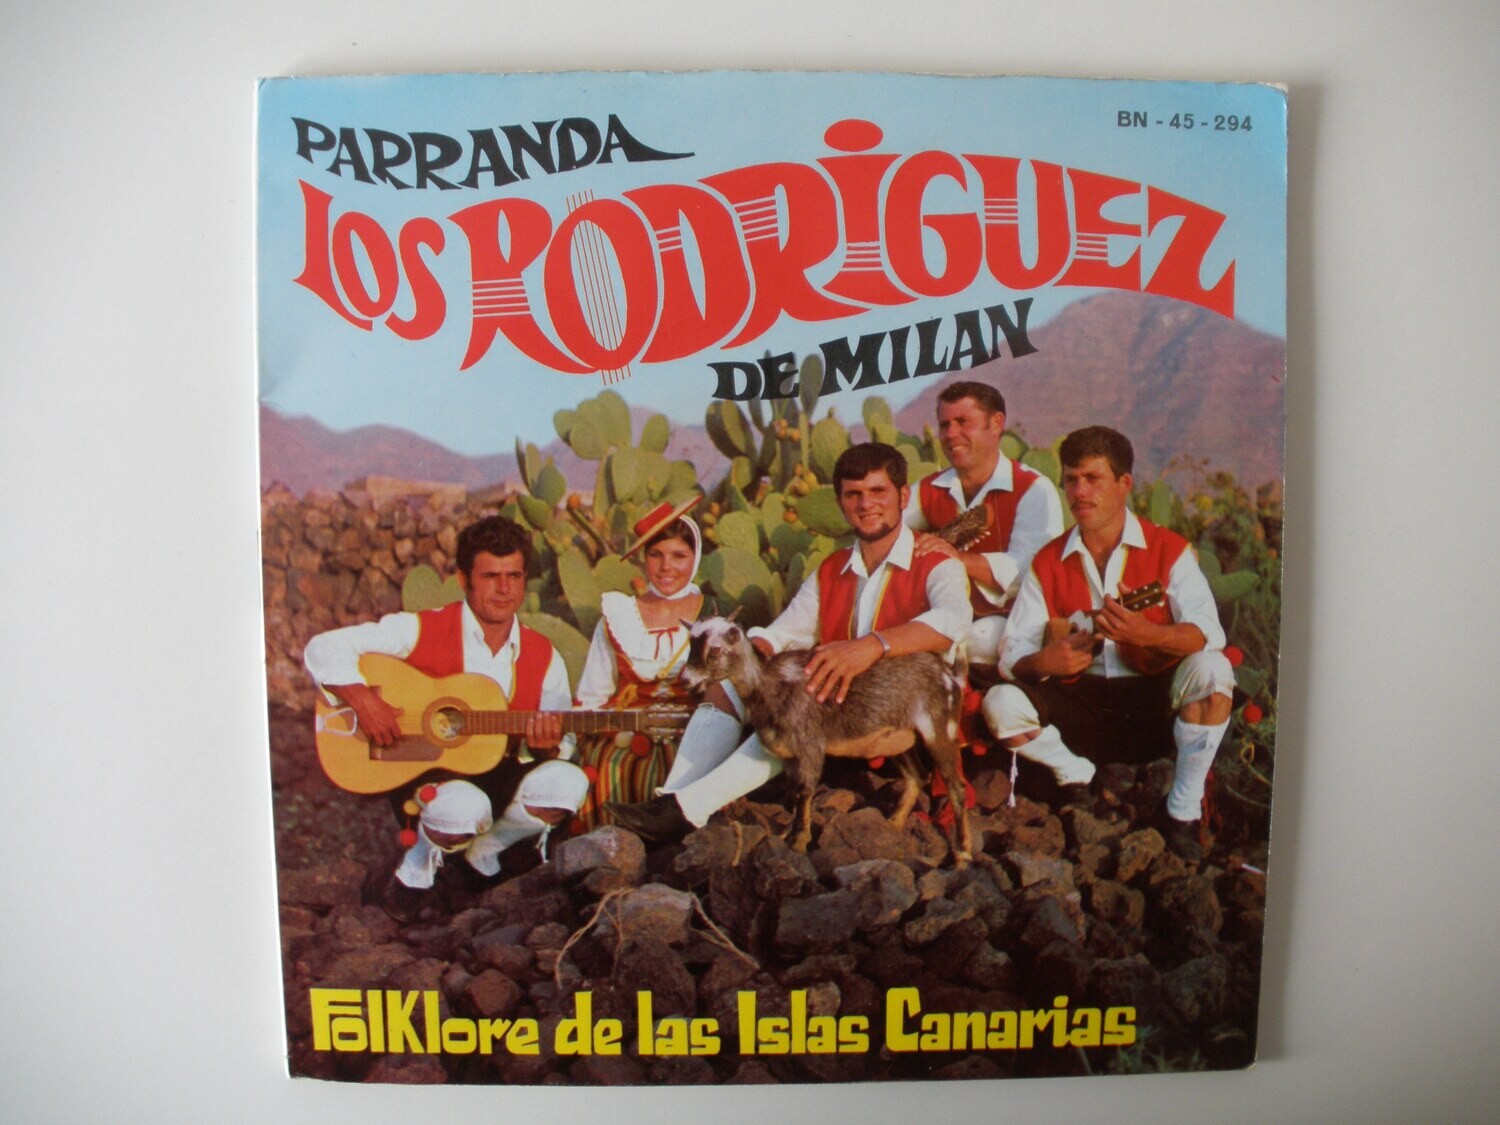 DISCO de Parranda de Los Rodriguez de Milan. 1970 Tenerife